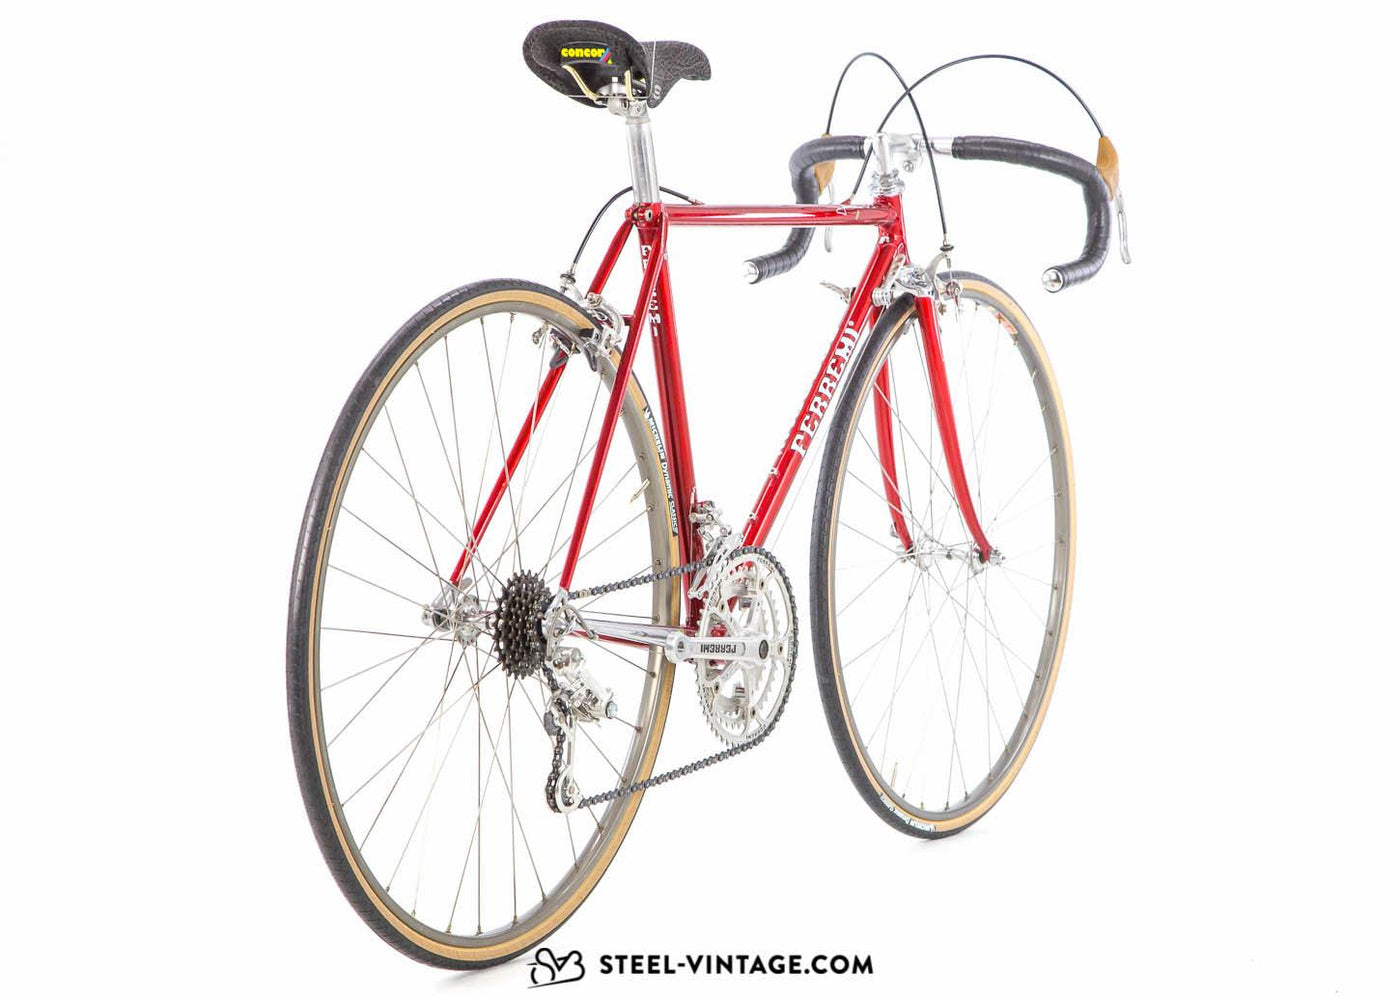 Ferremi Super Classic Climbing Bicycle 1980s - Steel Vintage Bikes